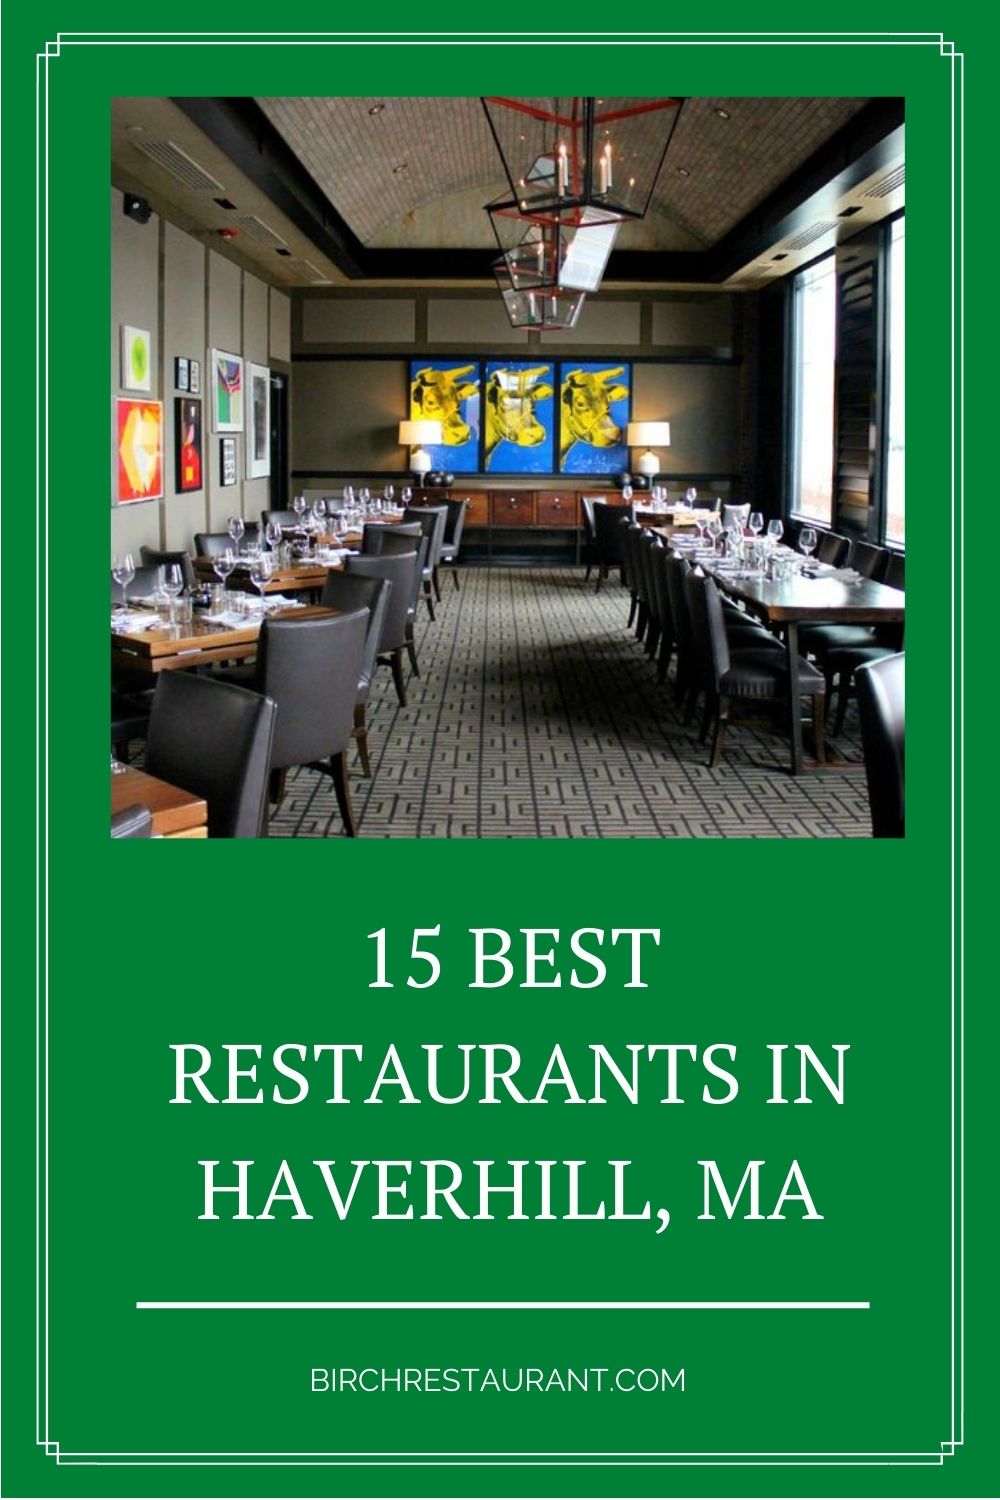 Best Restaurants in Haverhill